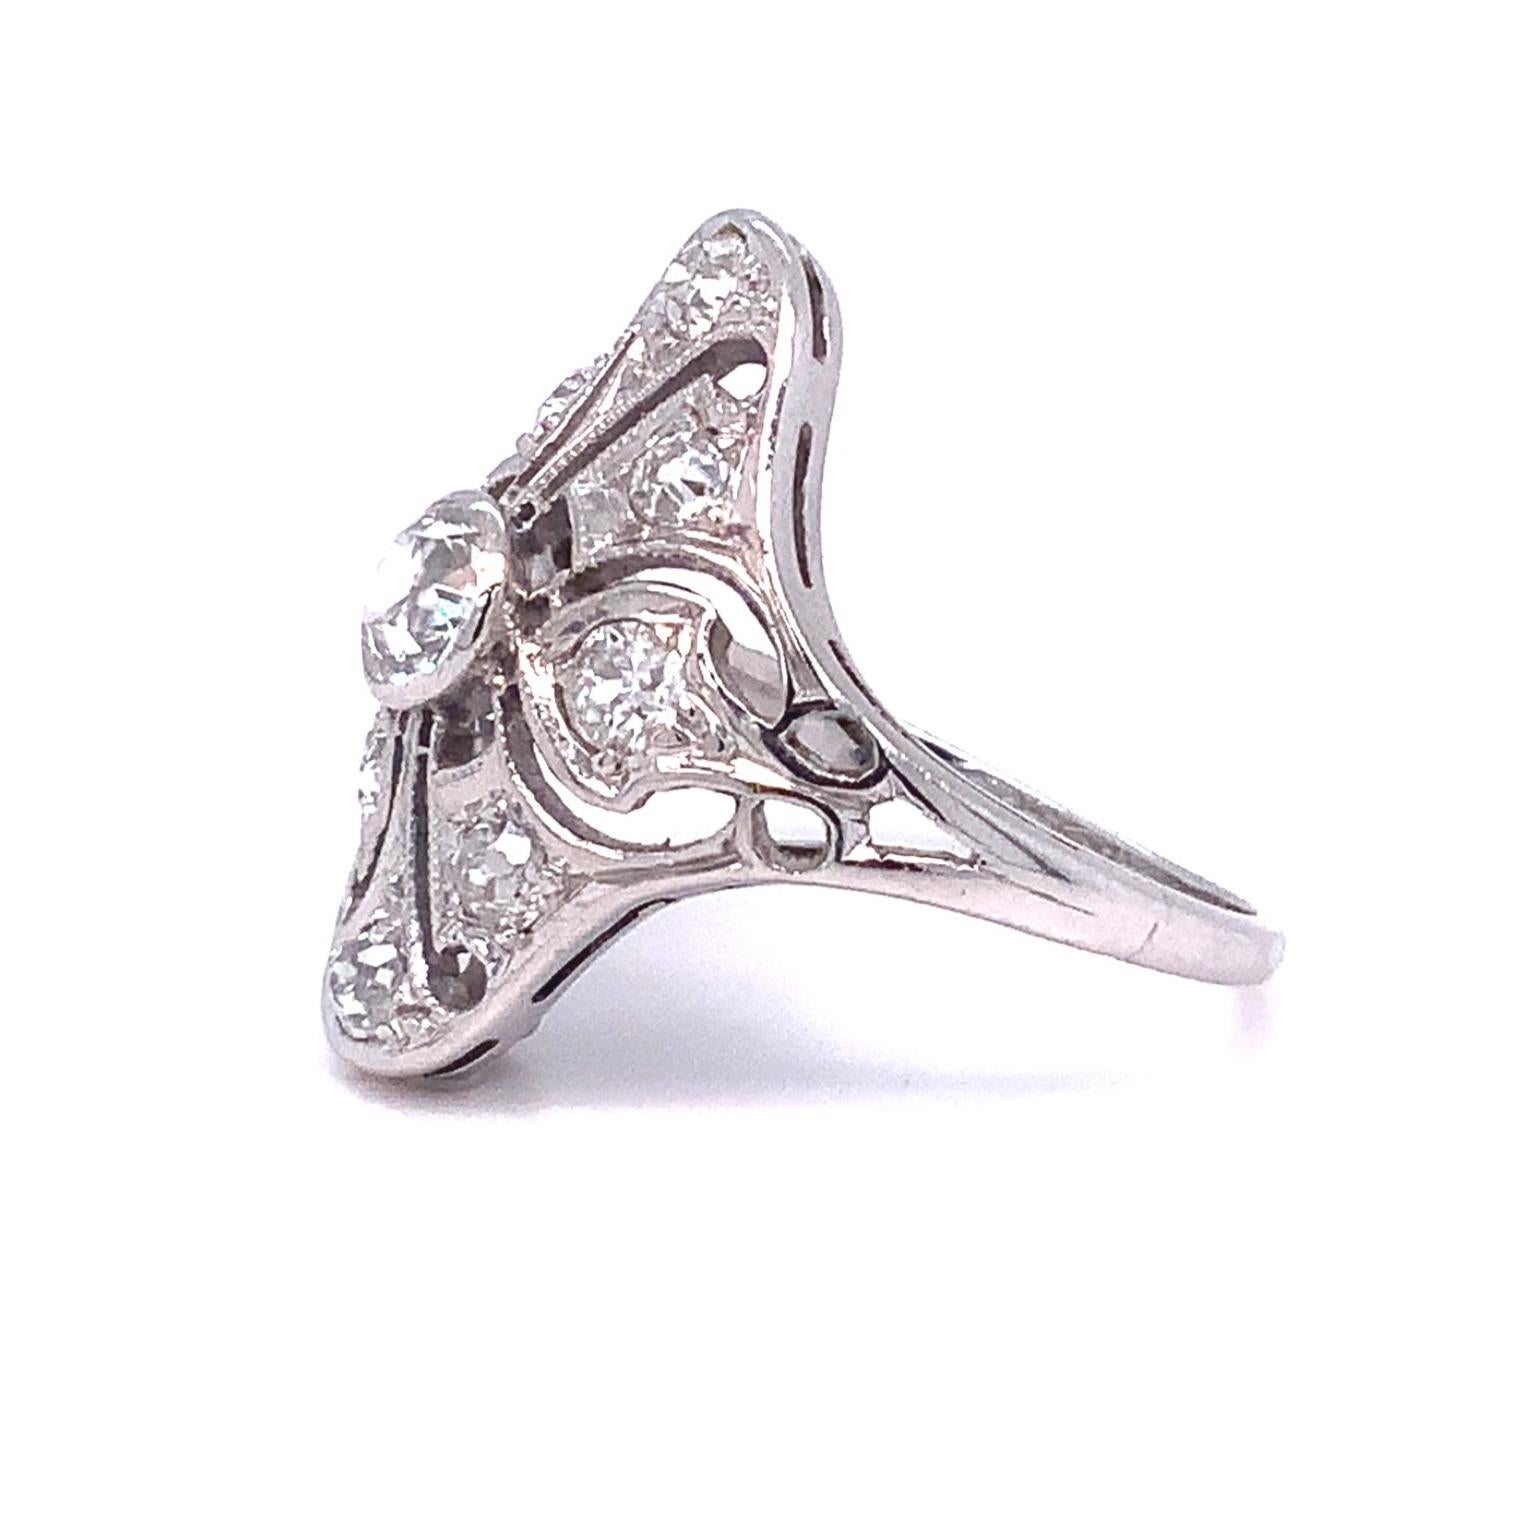 Antique Art Deco Fillagree Diamond Ring Set in 14 Karat White Gold For Sale 1